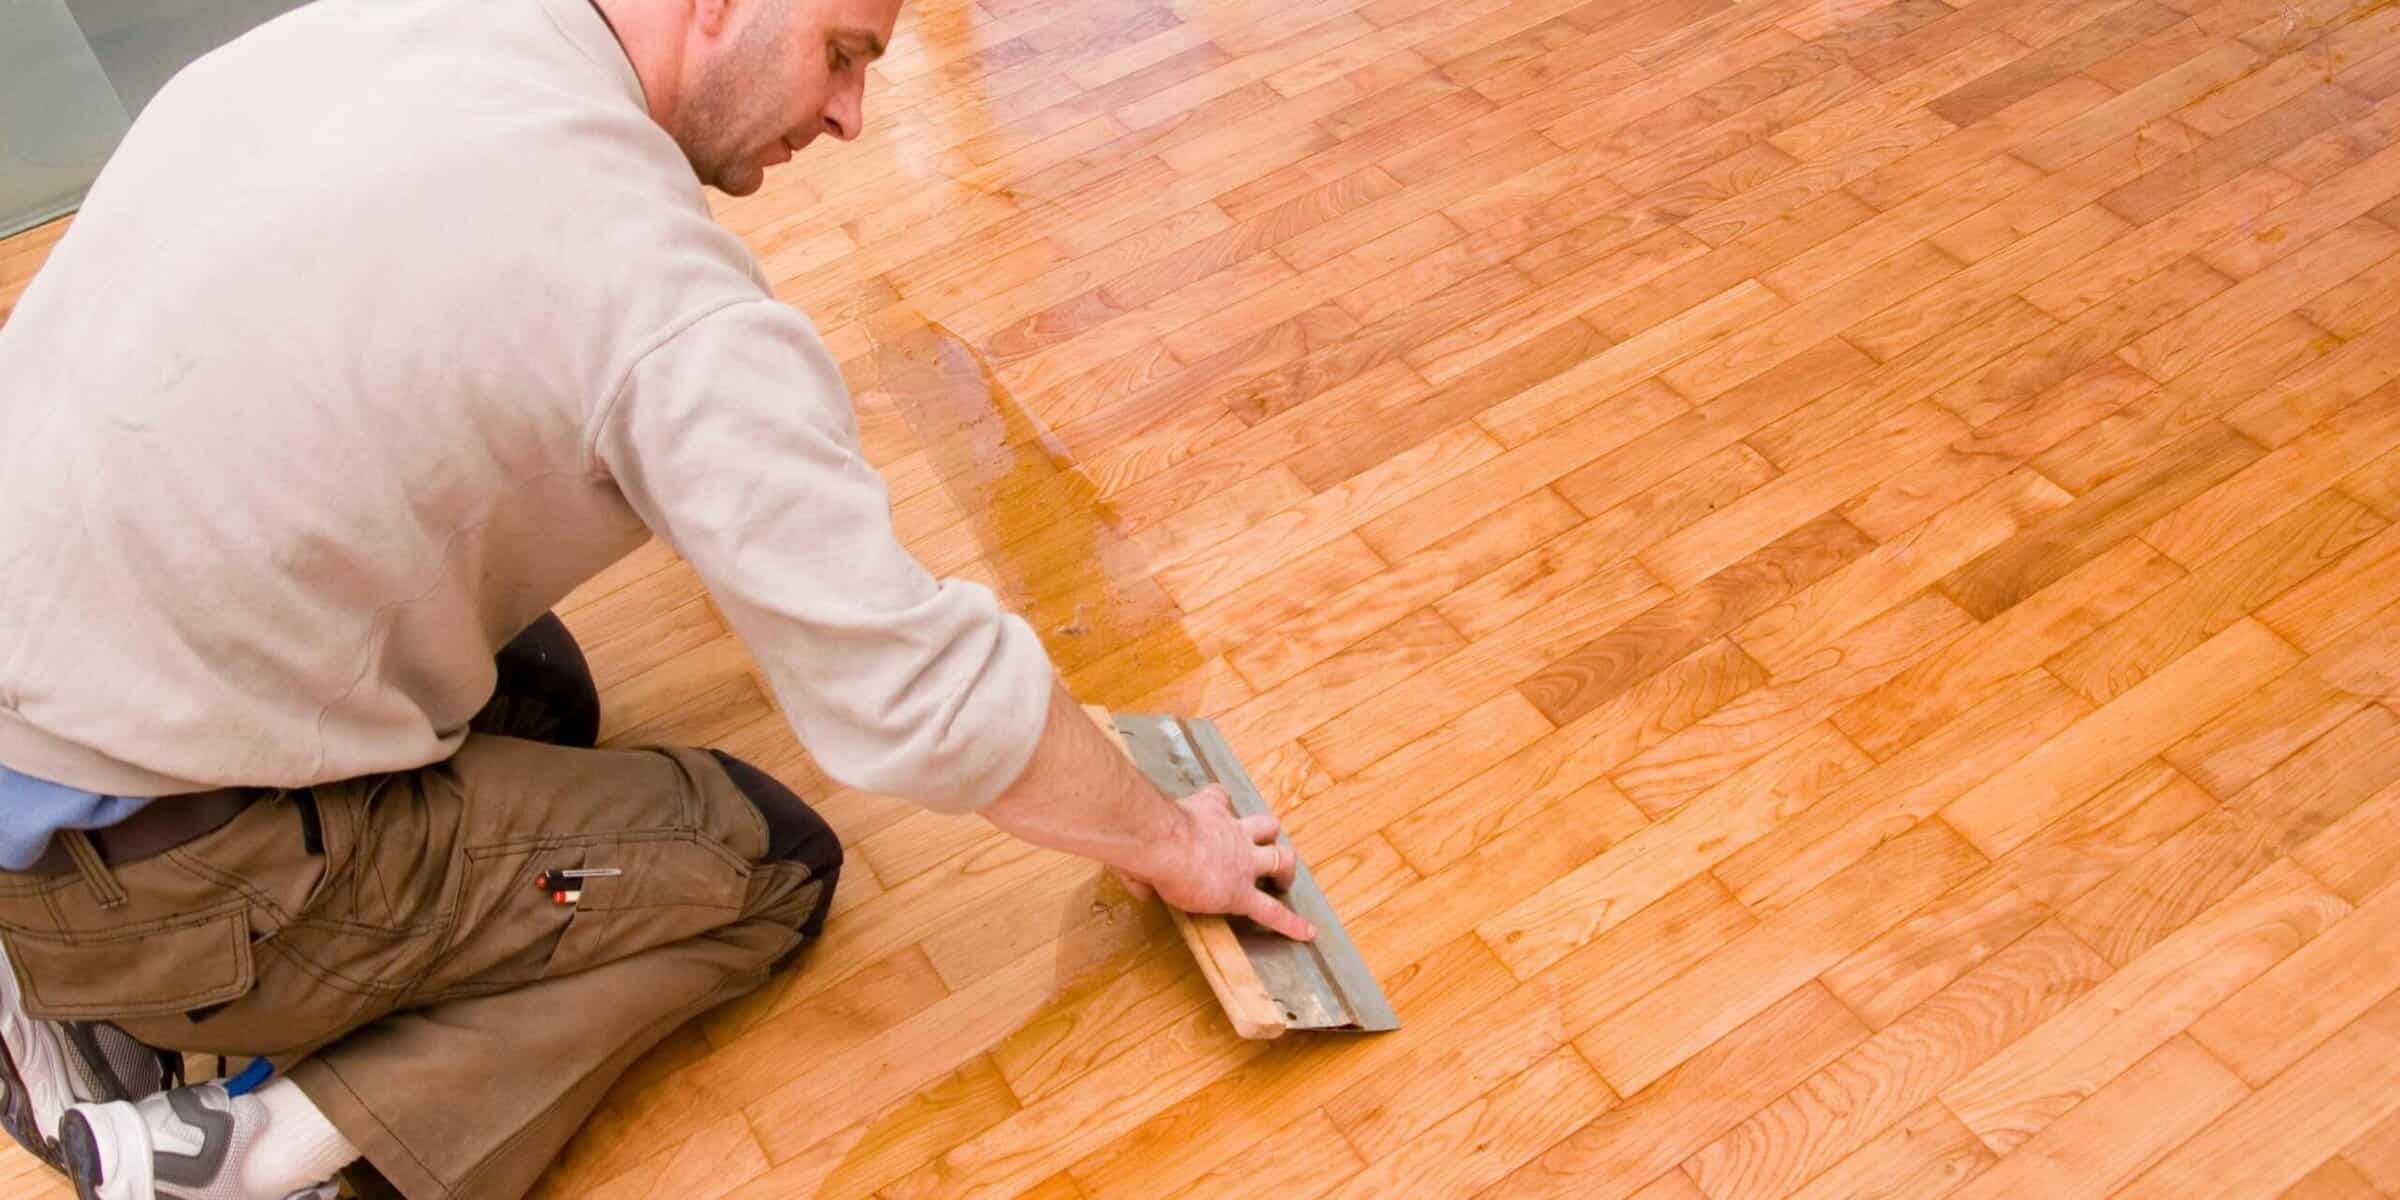 Comparing the Best Floor Wax Options for Hardwood Floors